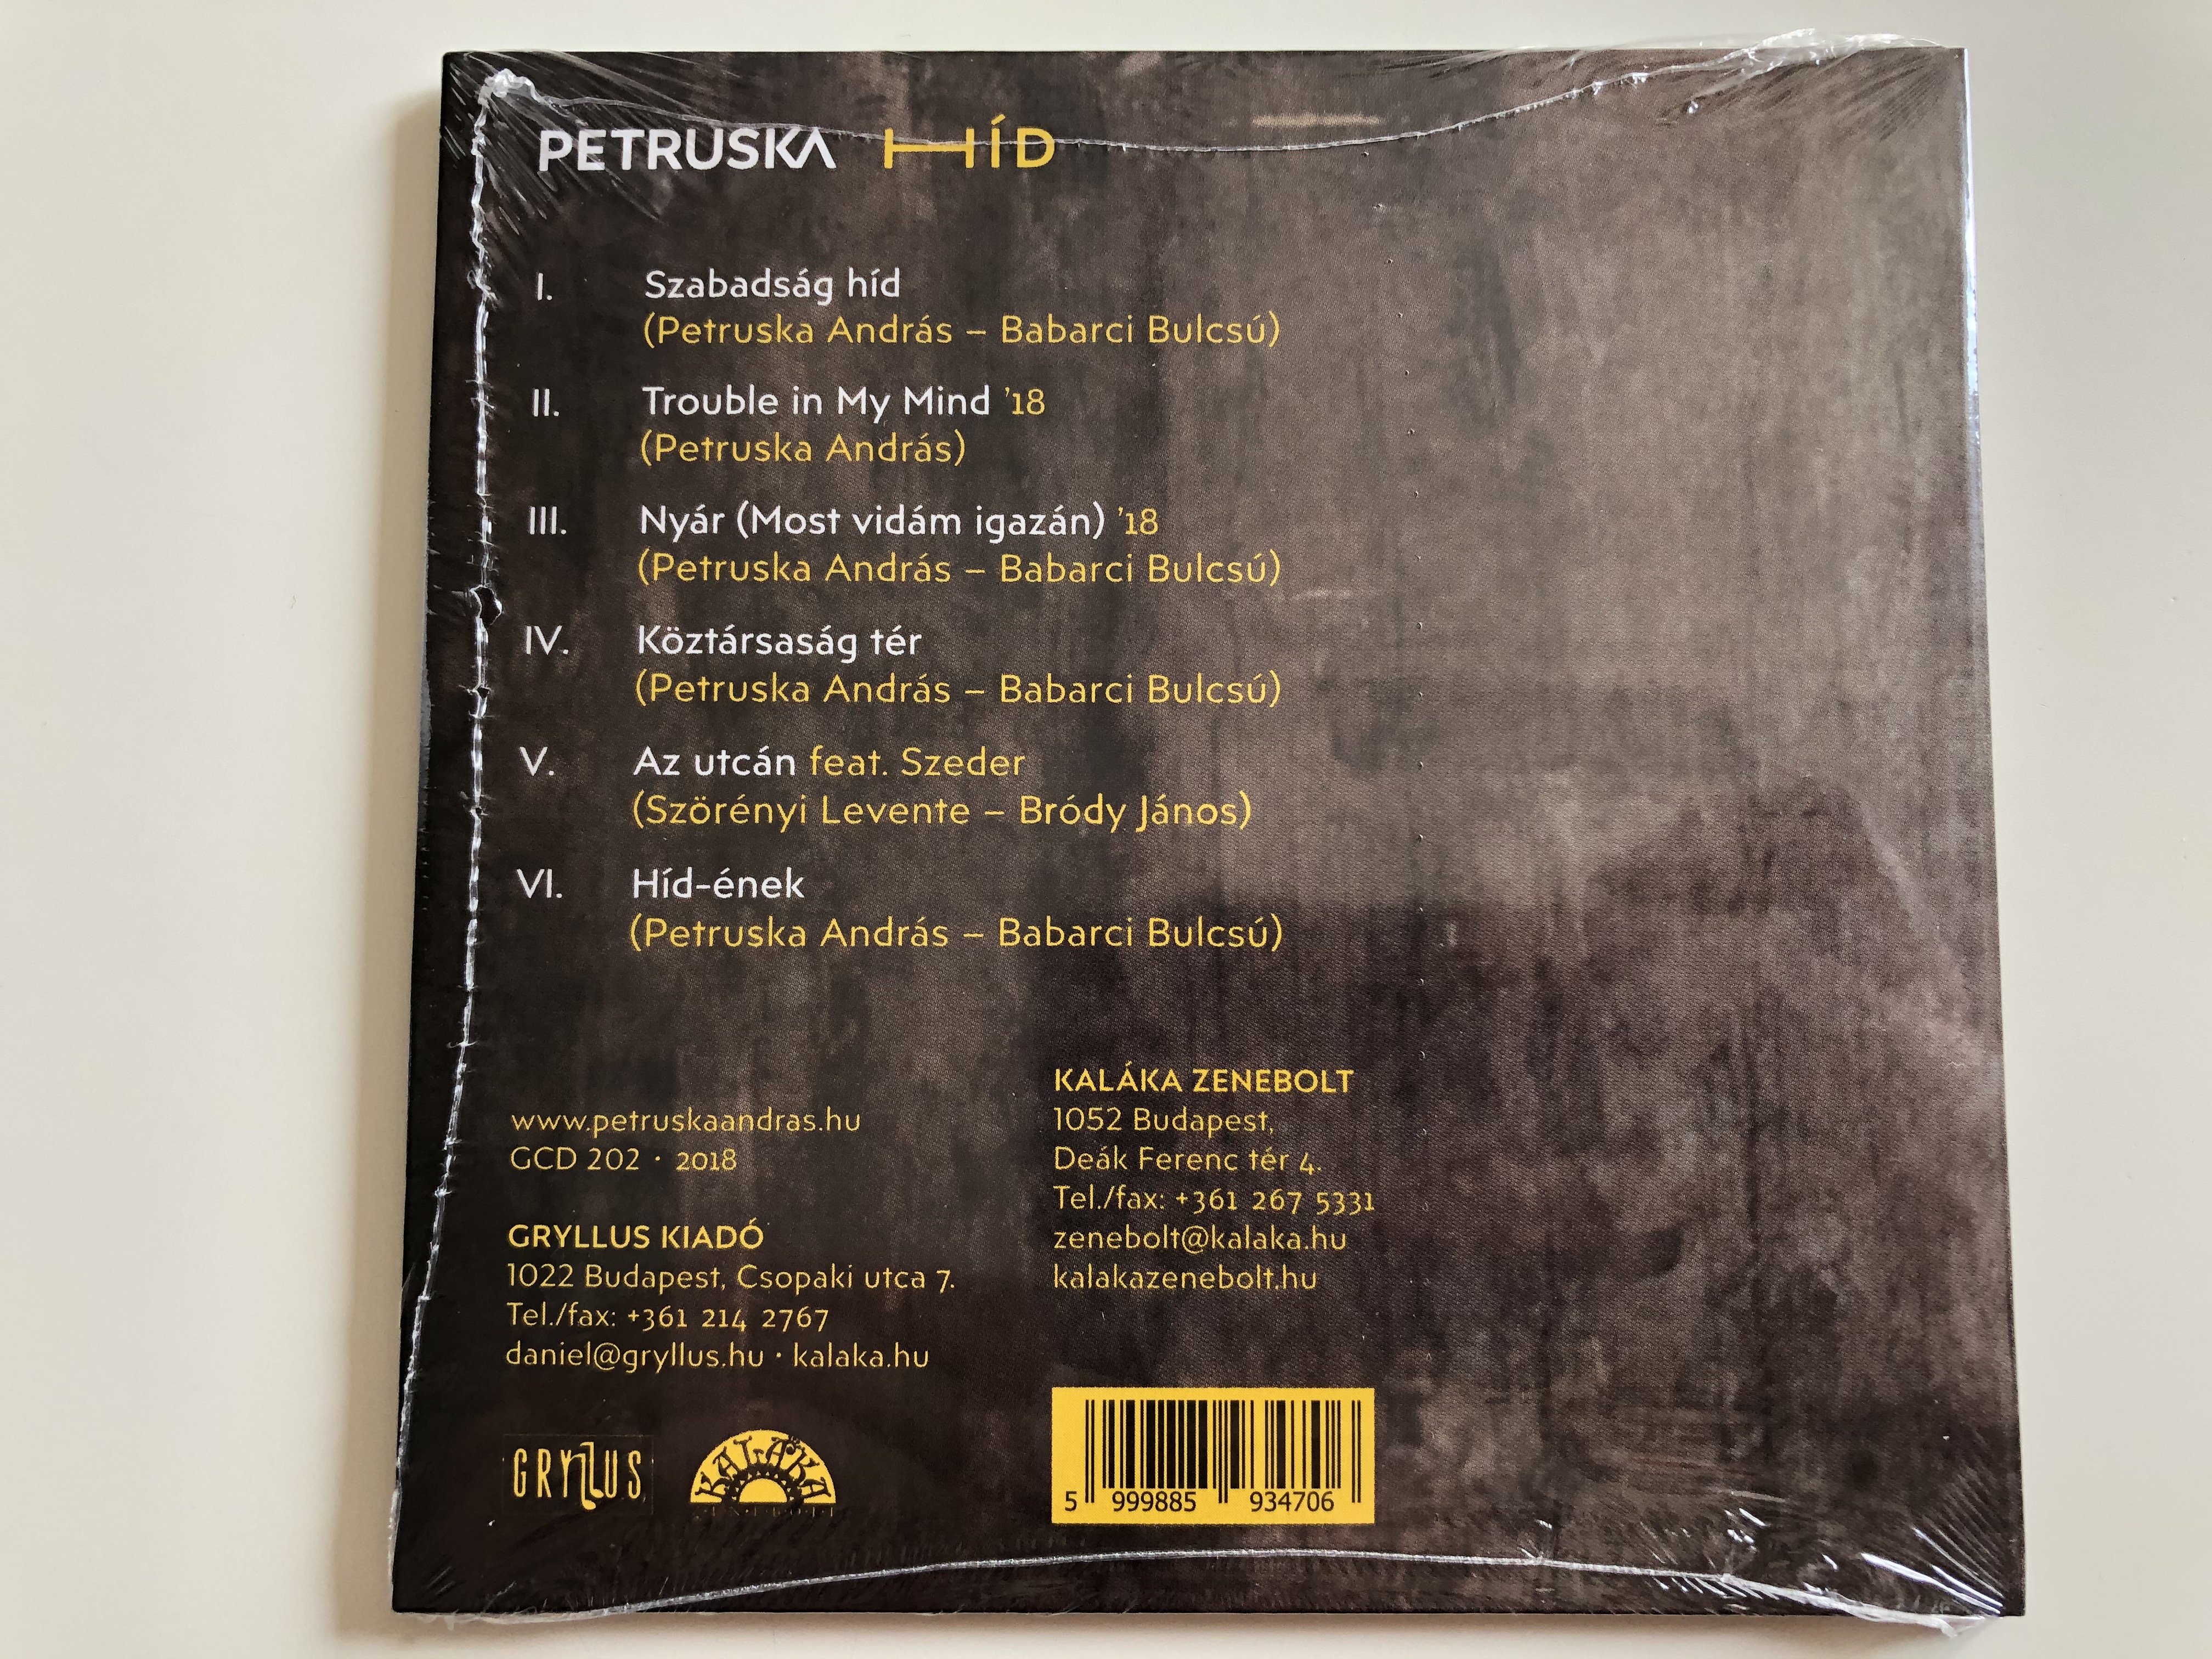 petruska-hid-gryllus-audio-cd-2018-gcd-202-2-.jpg